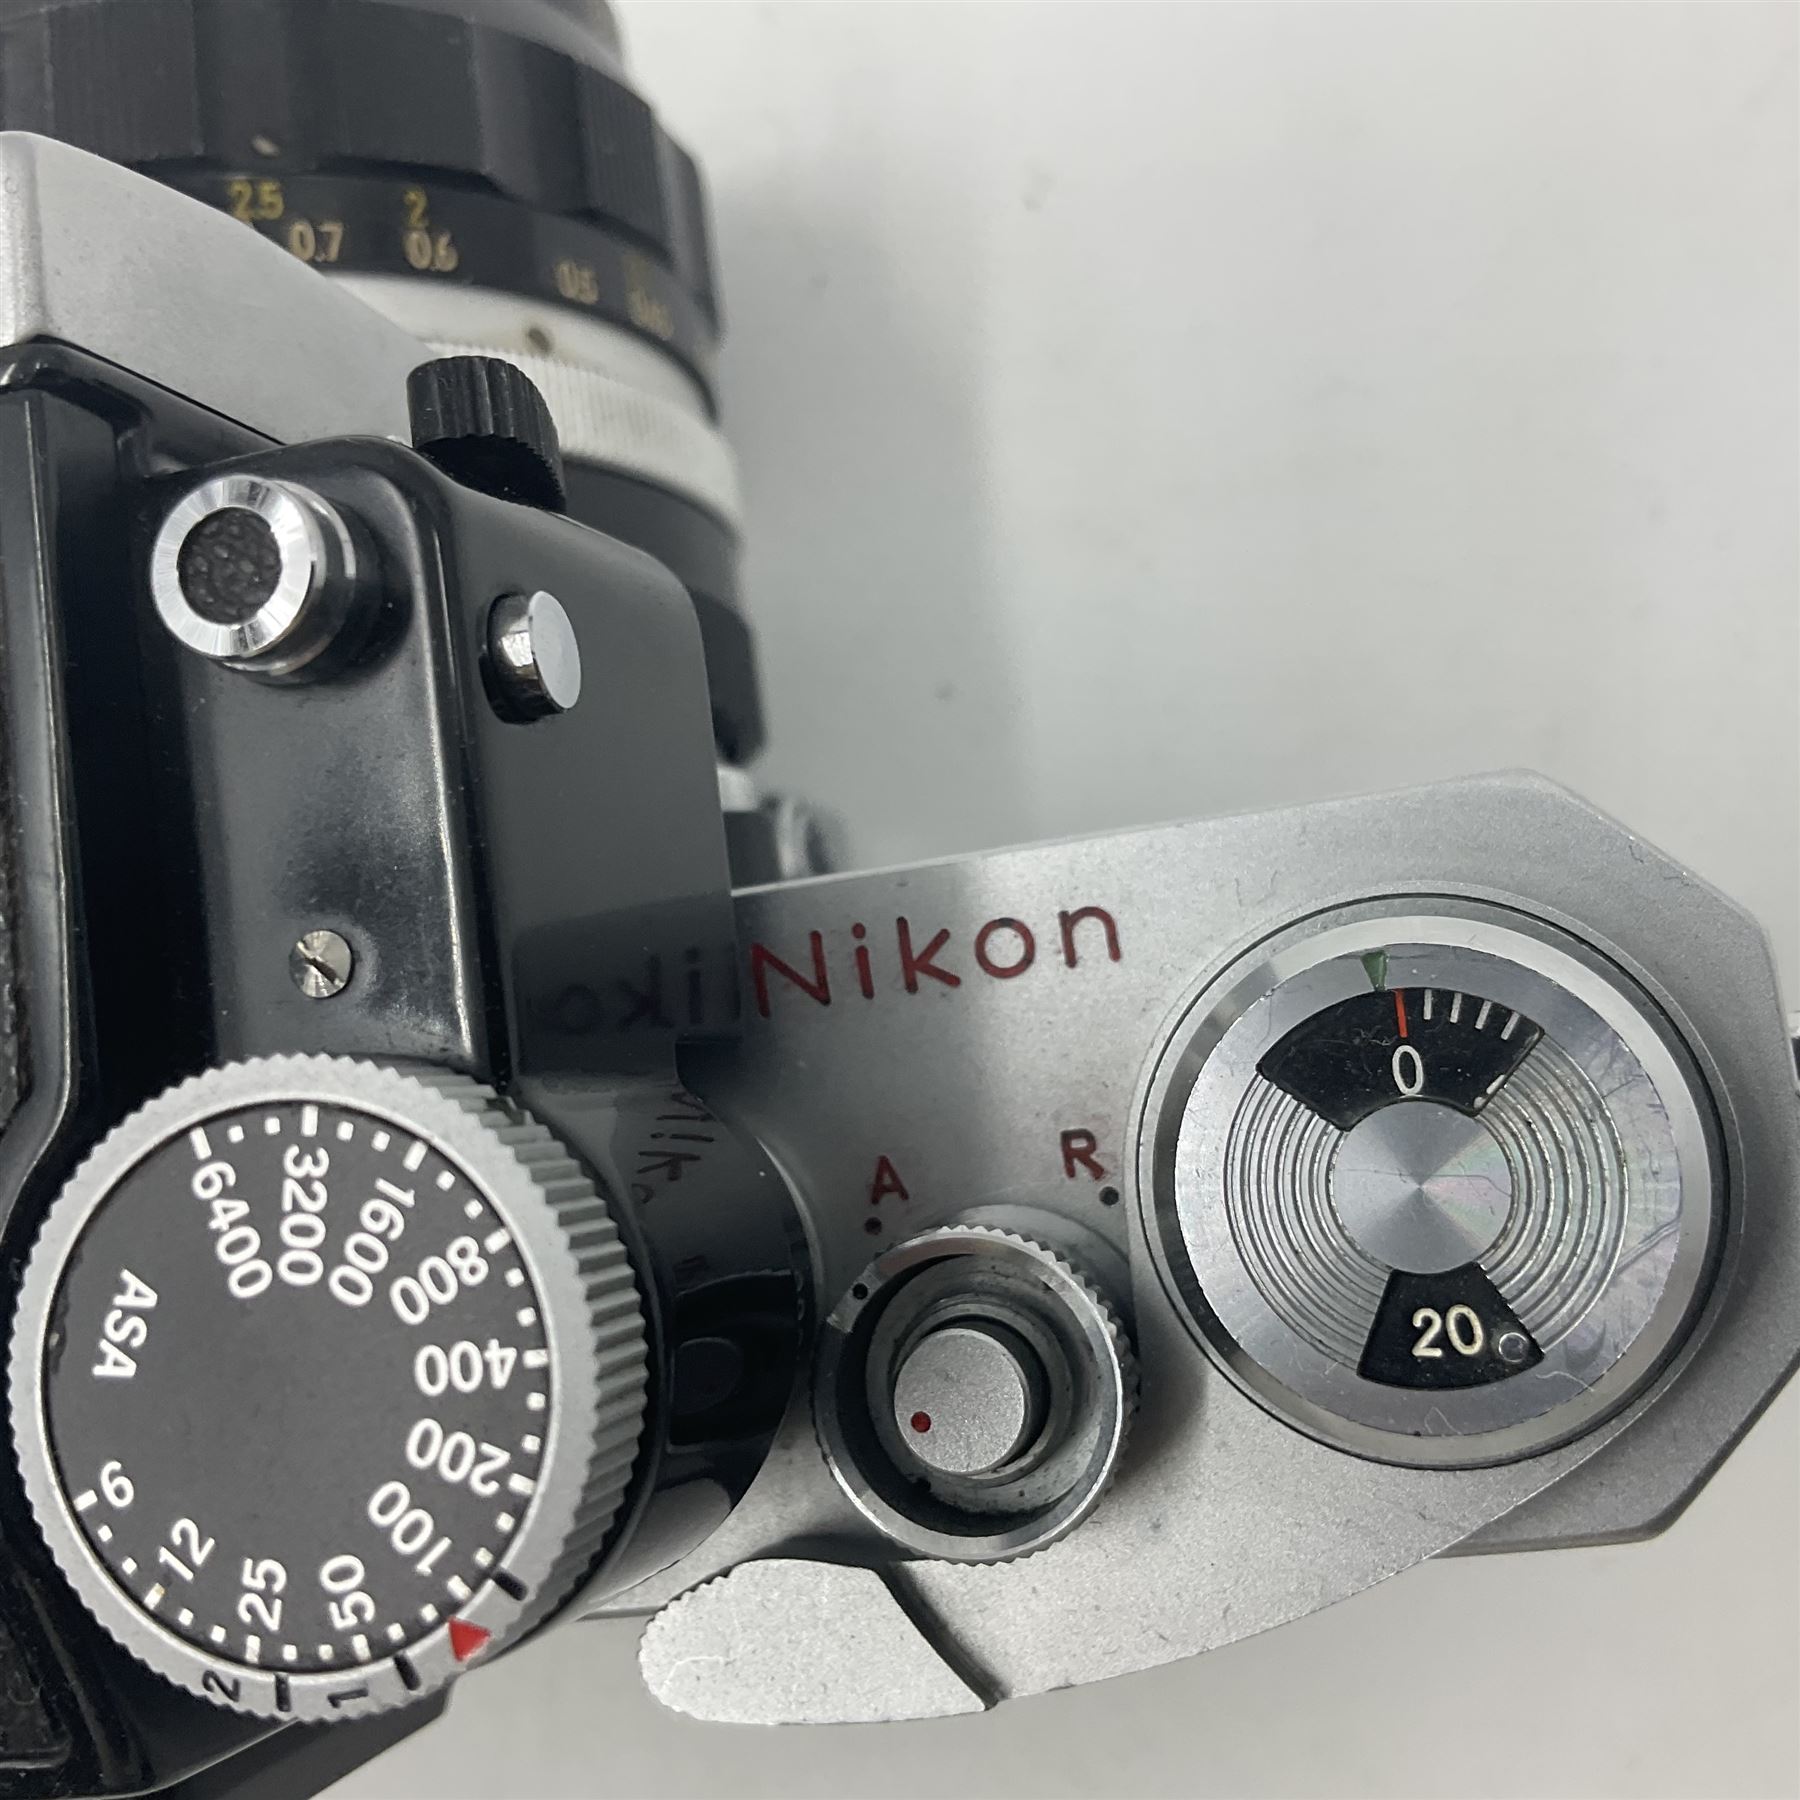 Nikon photomic Ftn camera body - Image 8 of 12